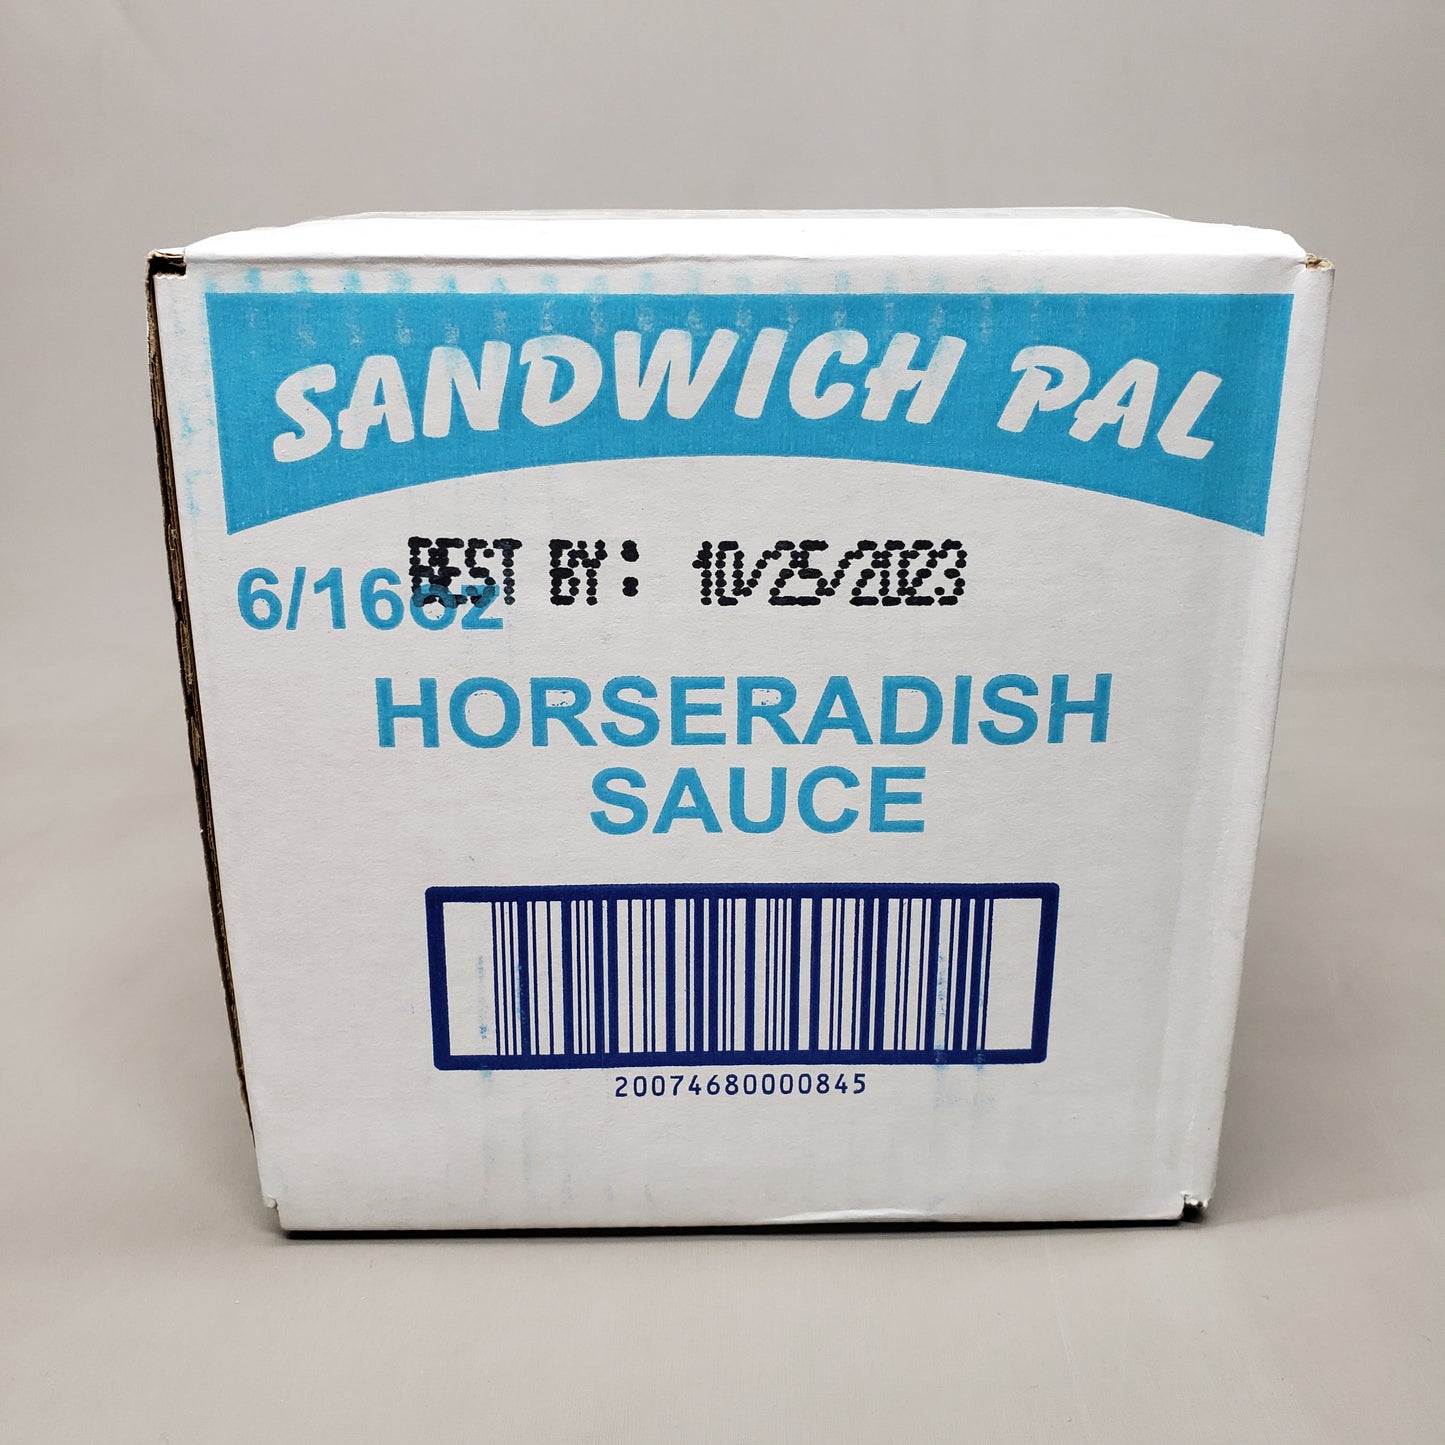 ZA@ WOEBER'S Mustard MFG Co. 6PK of Sandwich Pal Horseradish Sauce 6/16 oz 10/23